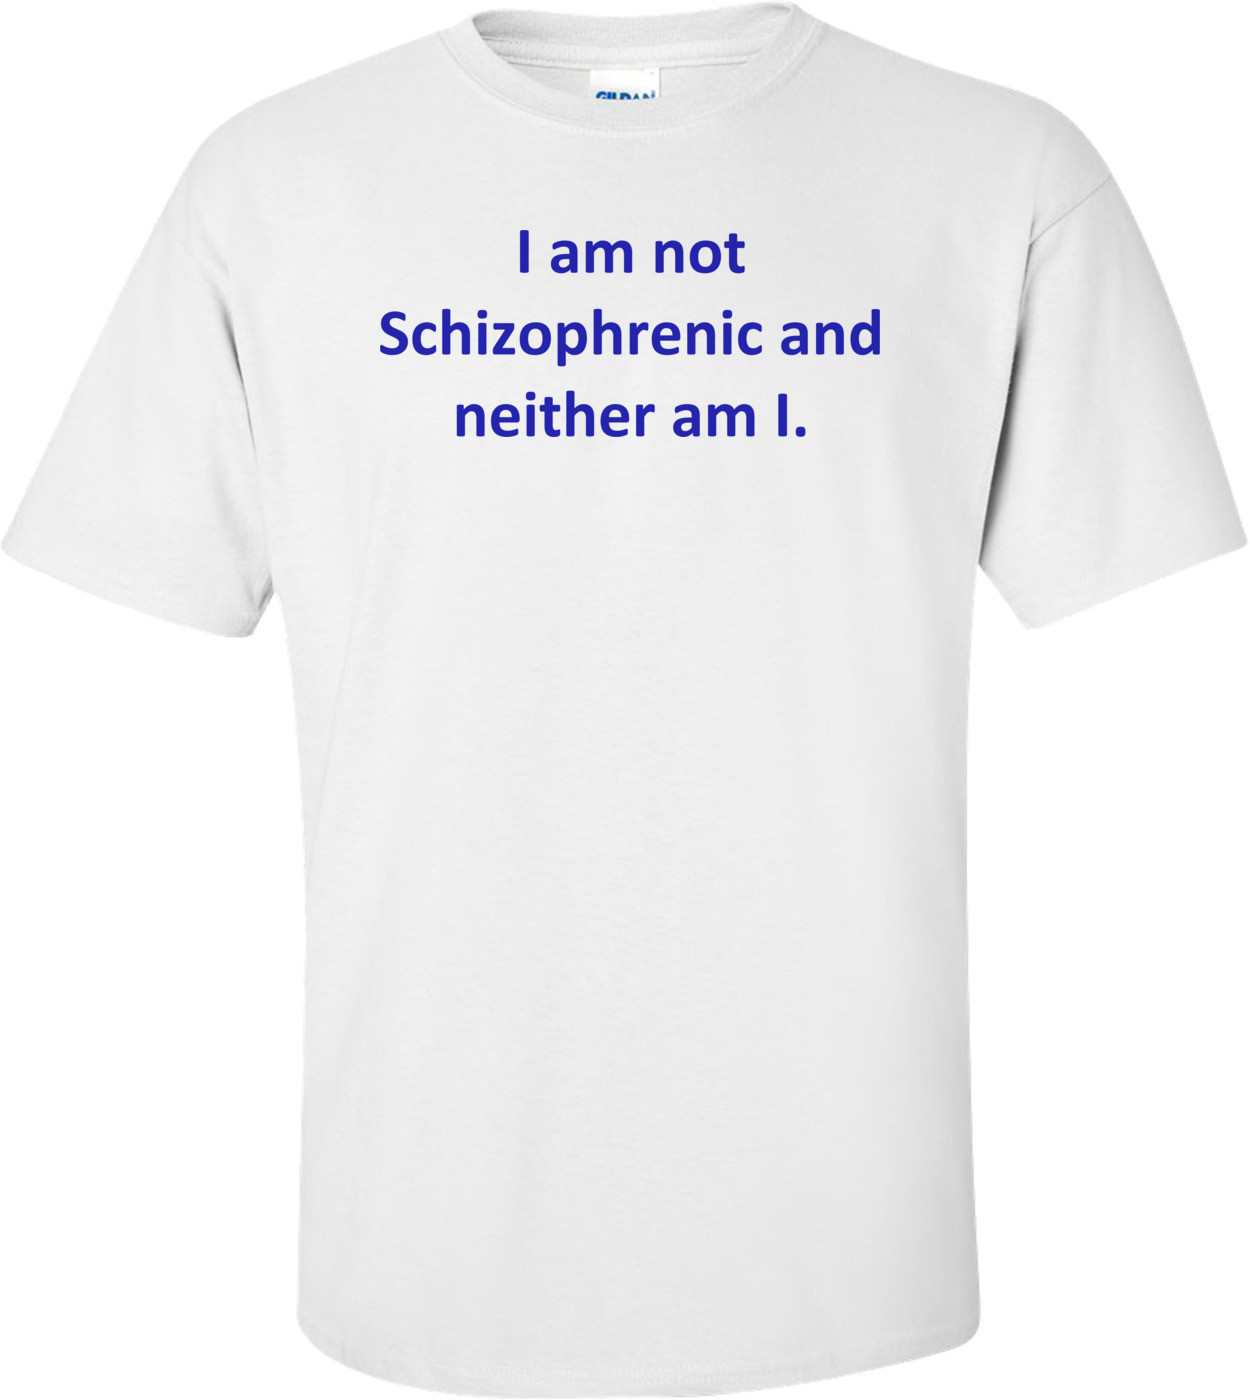 I am not Schizophrenic and neither am I. Shirt